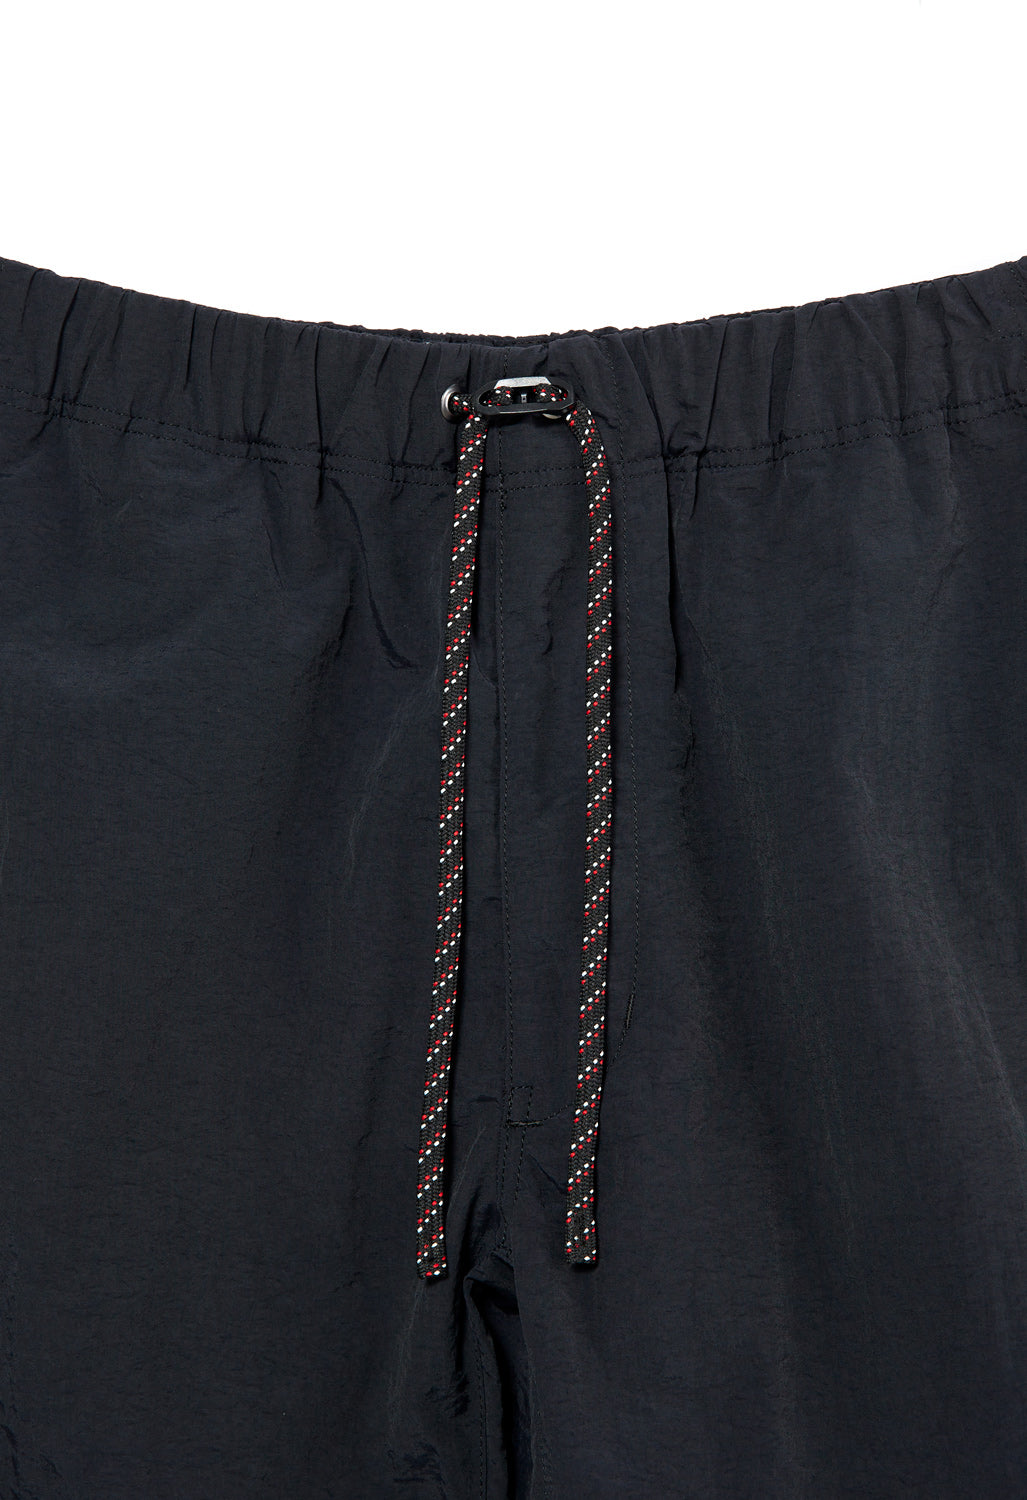 Nanga Men's Nylon Tusser Easy Shorts - Black